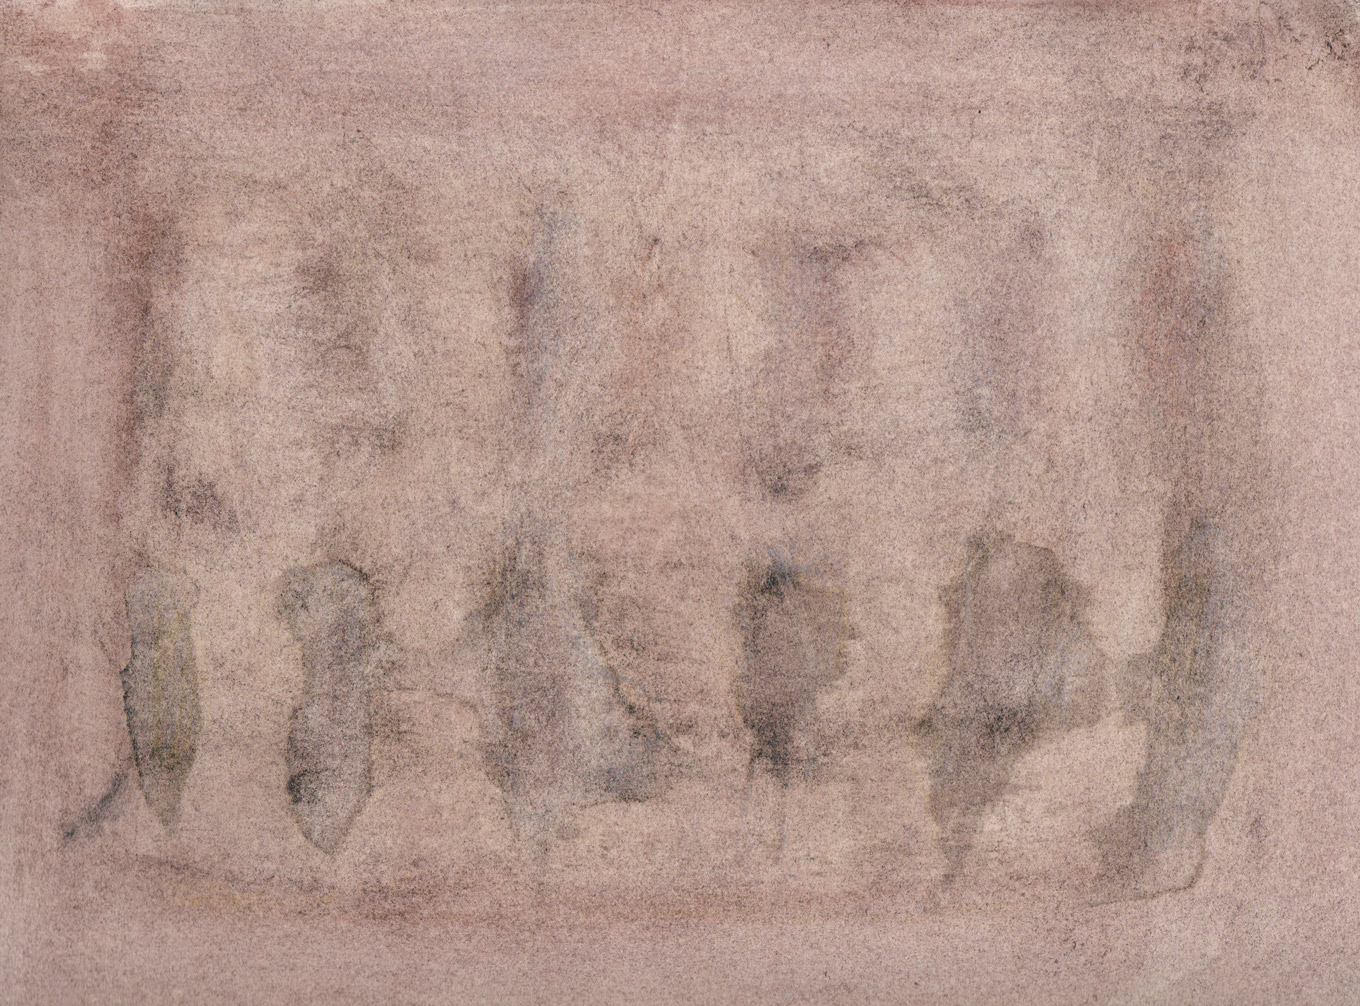 L1388 - Nicholas Herbert, British Artist, abstract painting, Residual Trace - Necropolis, 2022